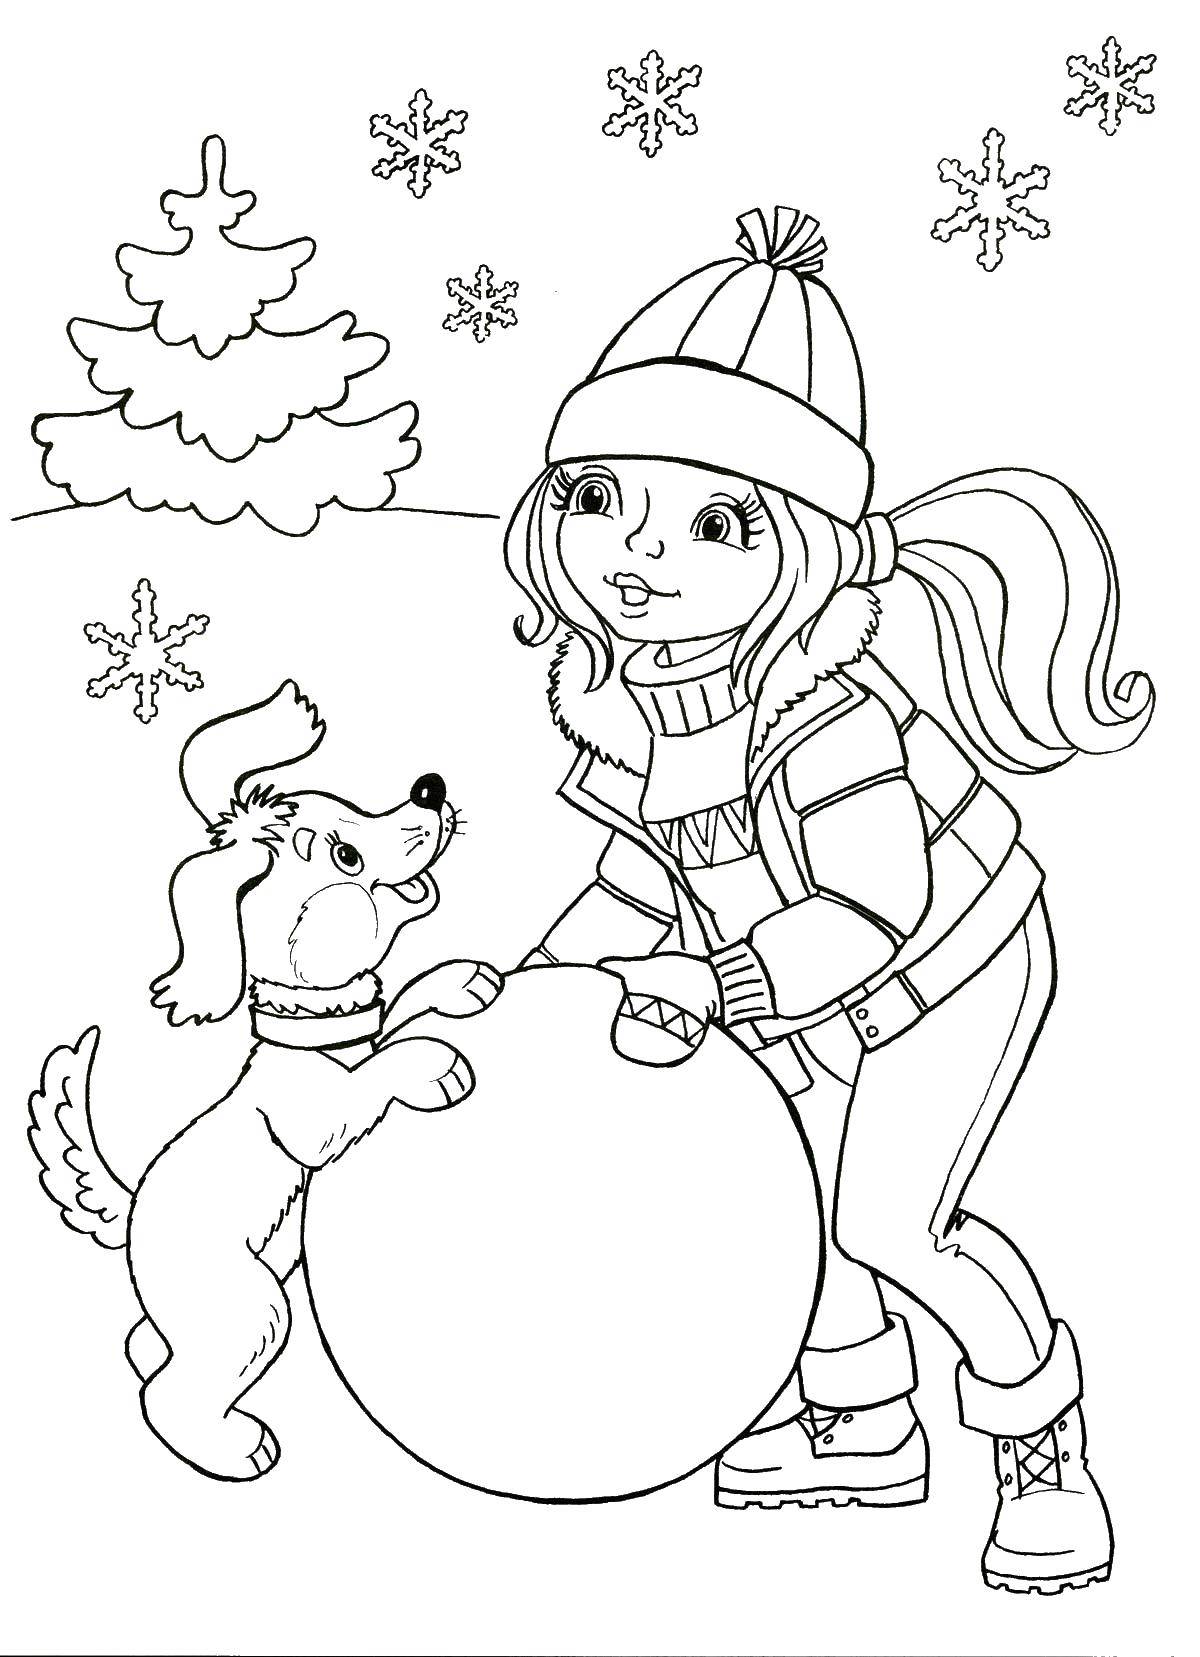 Раскраски для детей Зима, зимушка раскраски для школьников  Девочка и собачка лепят снеговика